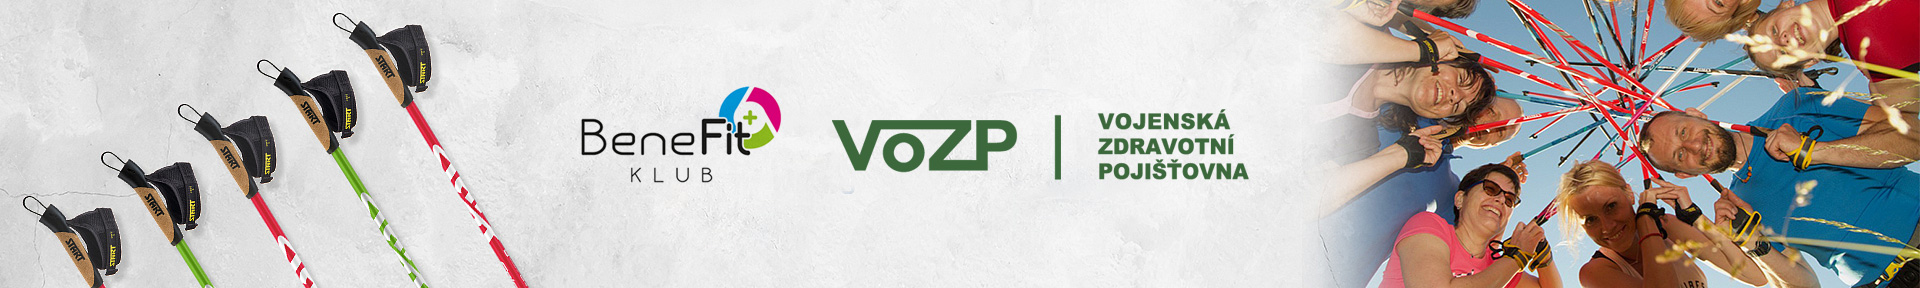 VOZP banner